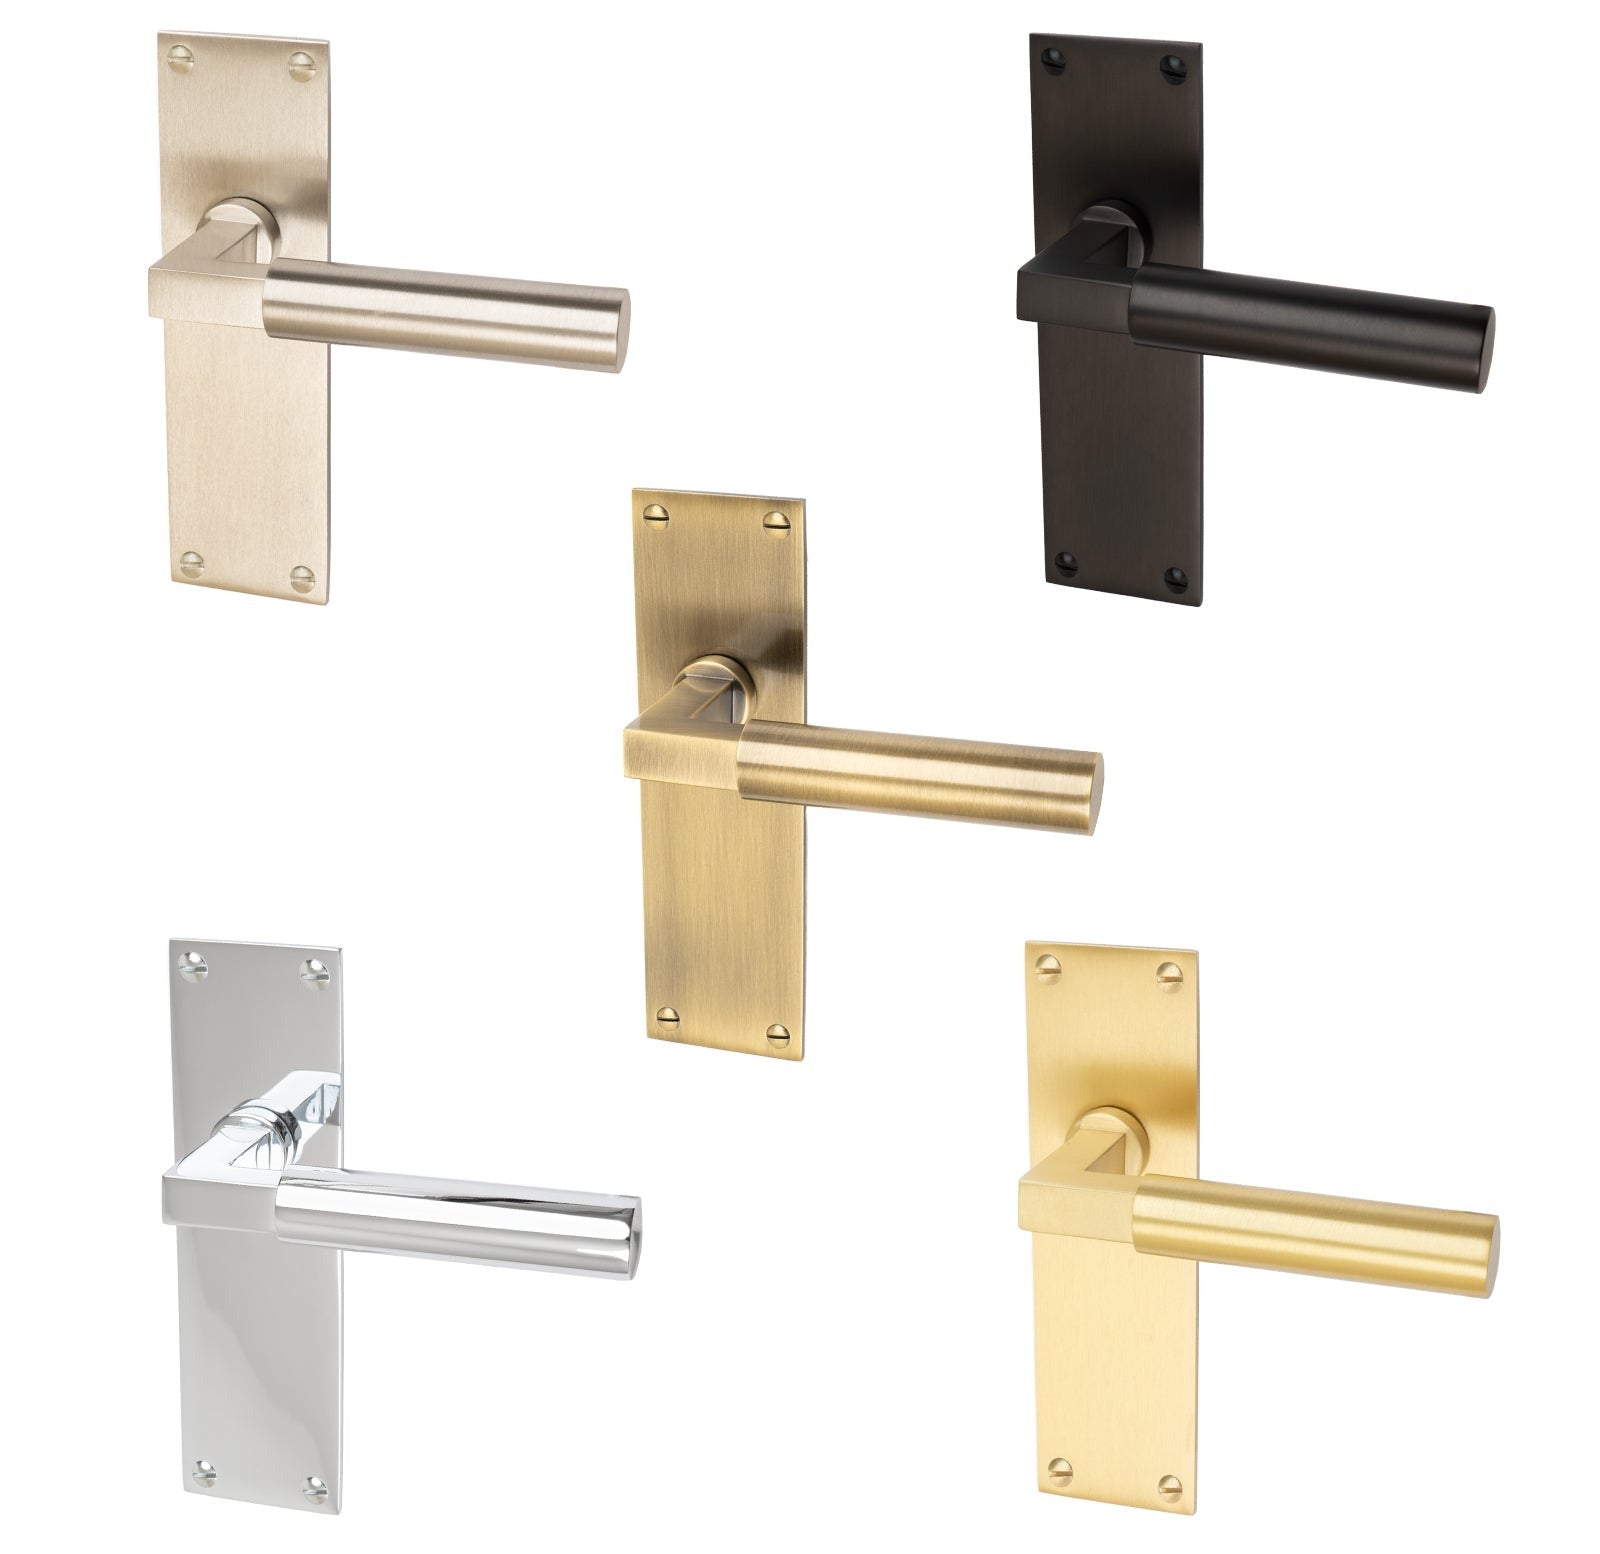 Bauhaus Door Handles On Plate Latch Handle in Matt Bronze, Satin Nickel, Bauhaus Chrome, Satin Brass and Aged Brass.